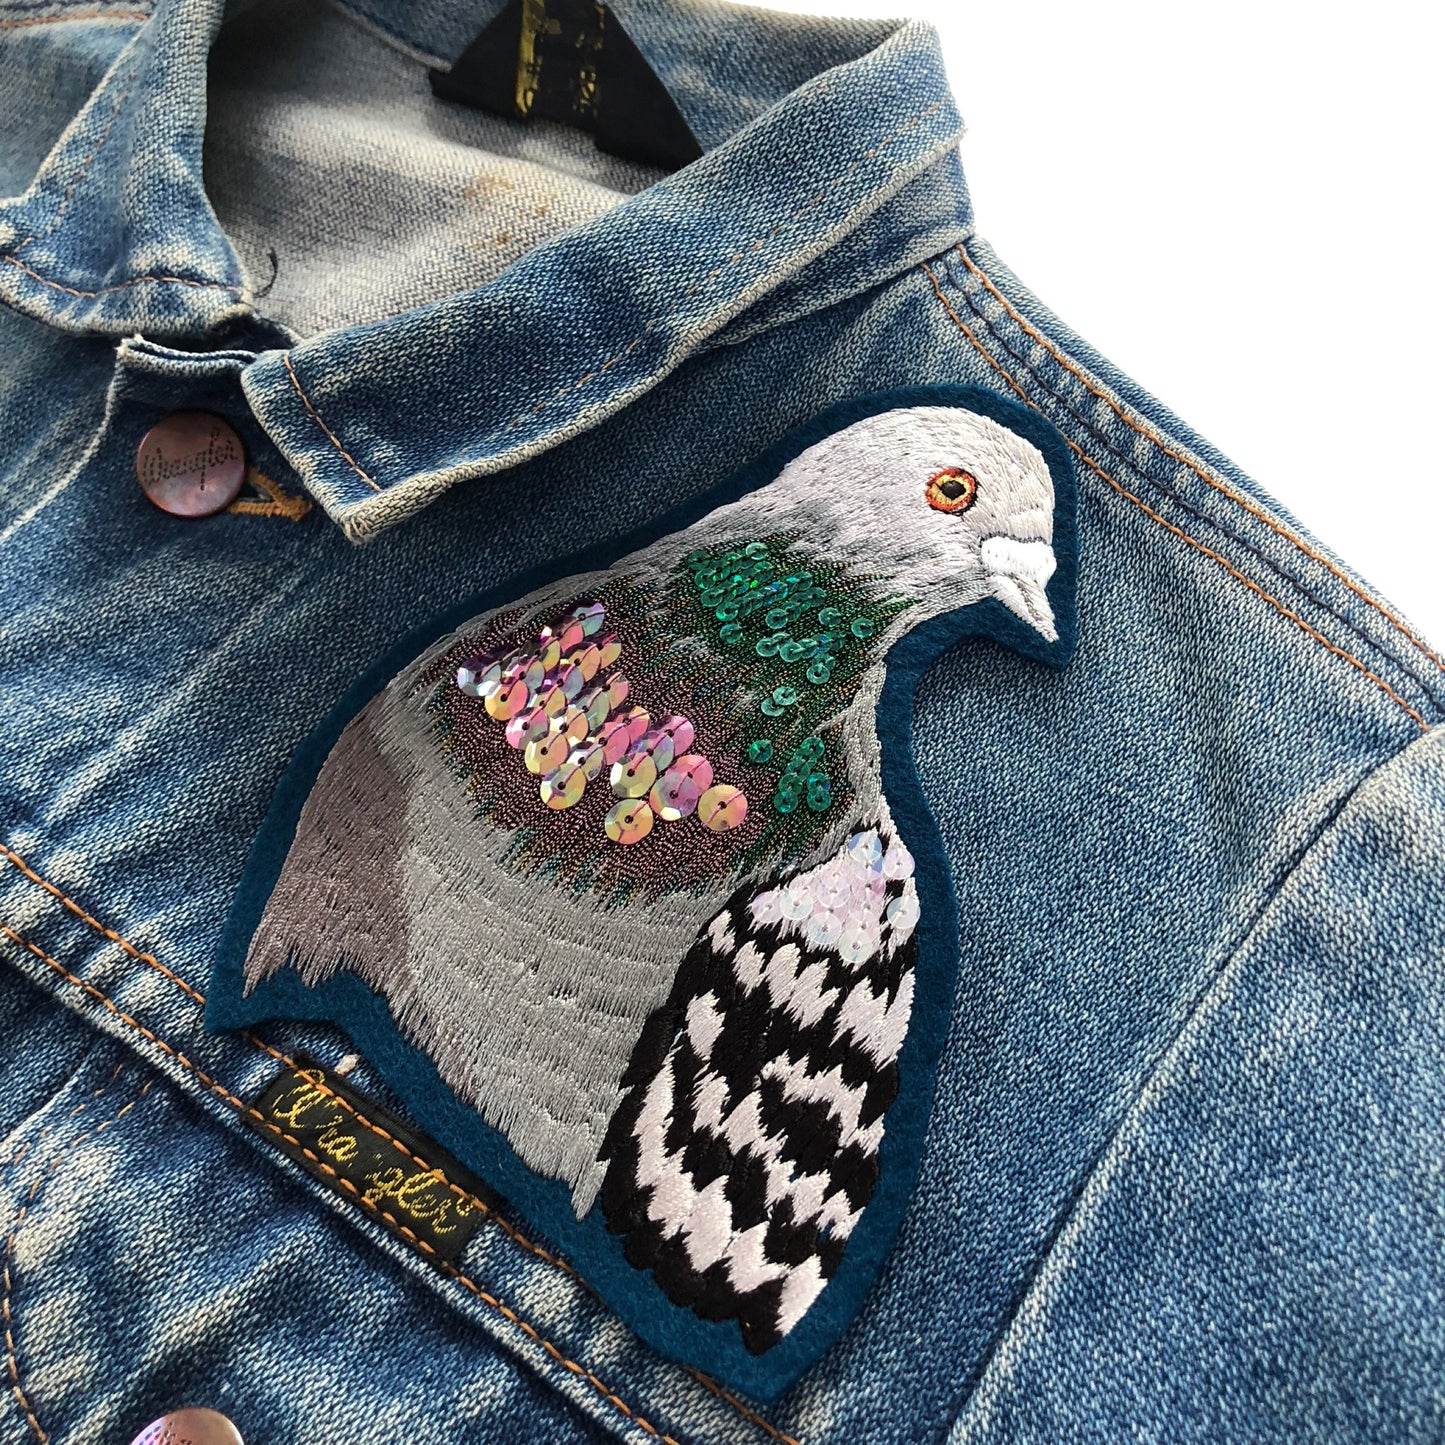 Sparkly pigeon portrait seen on the front shoulder of a blue denim jacket